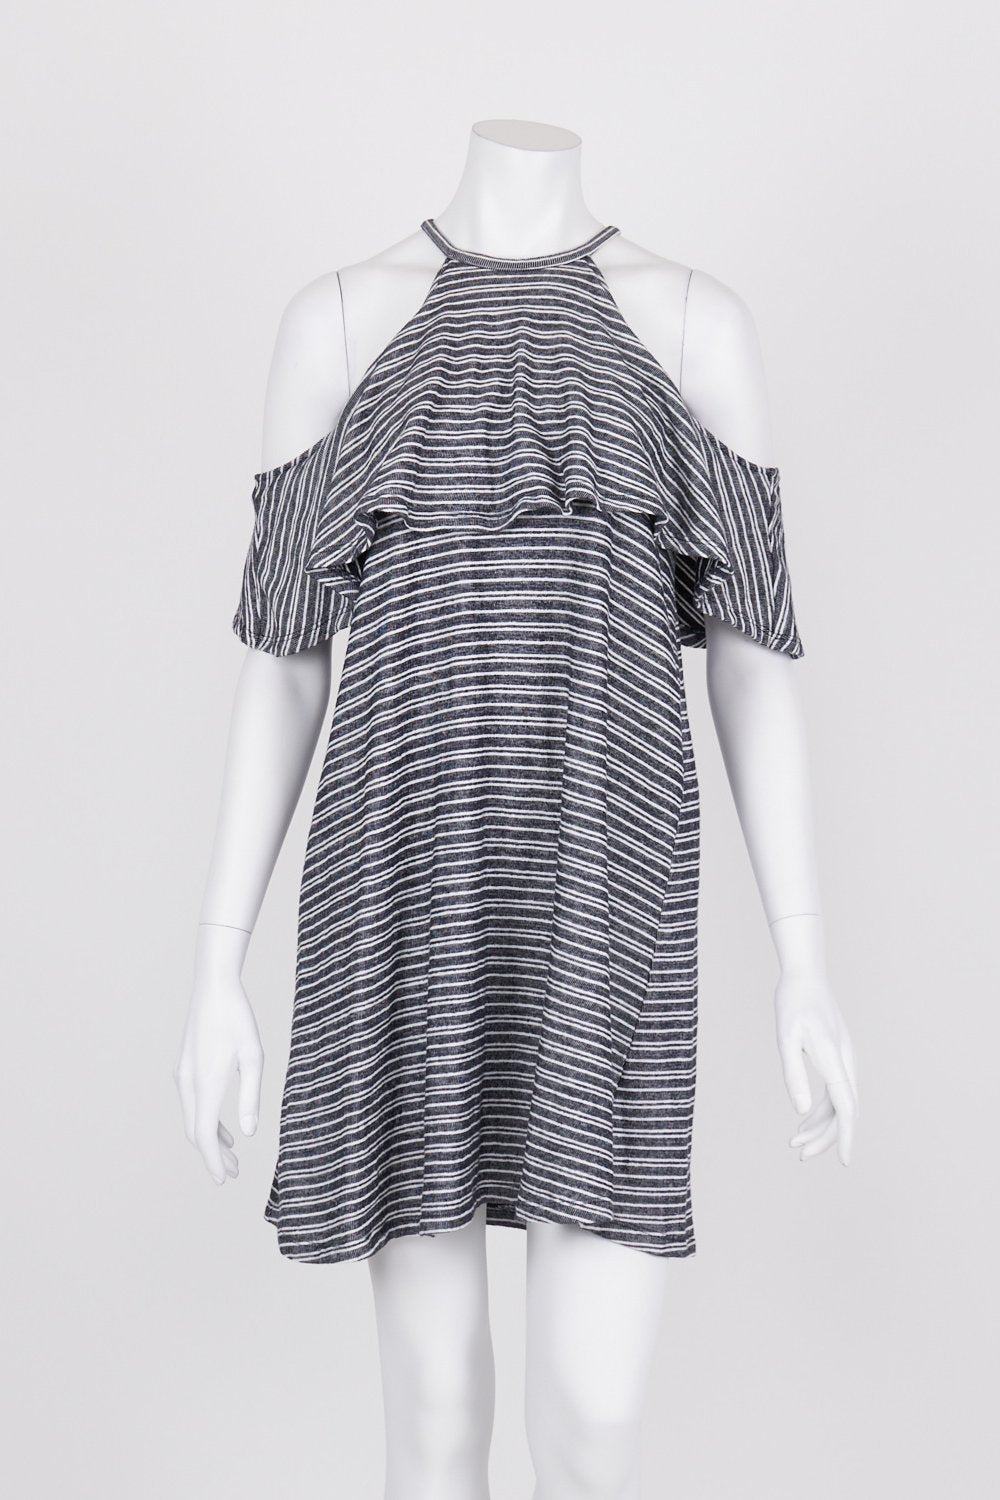 Seed Black and White Striped Ruffle Dress XS